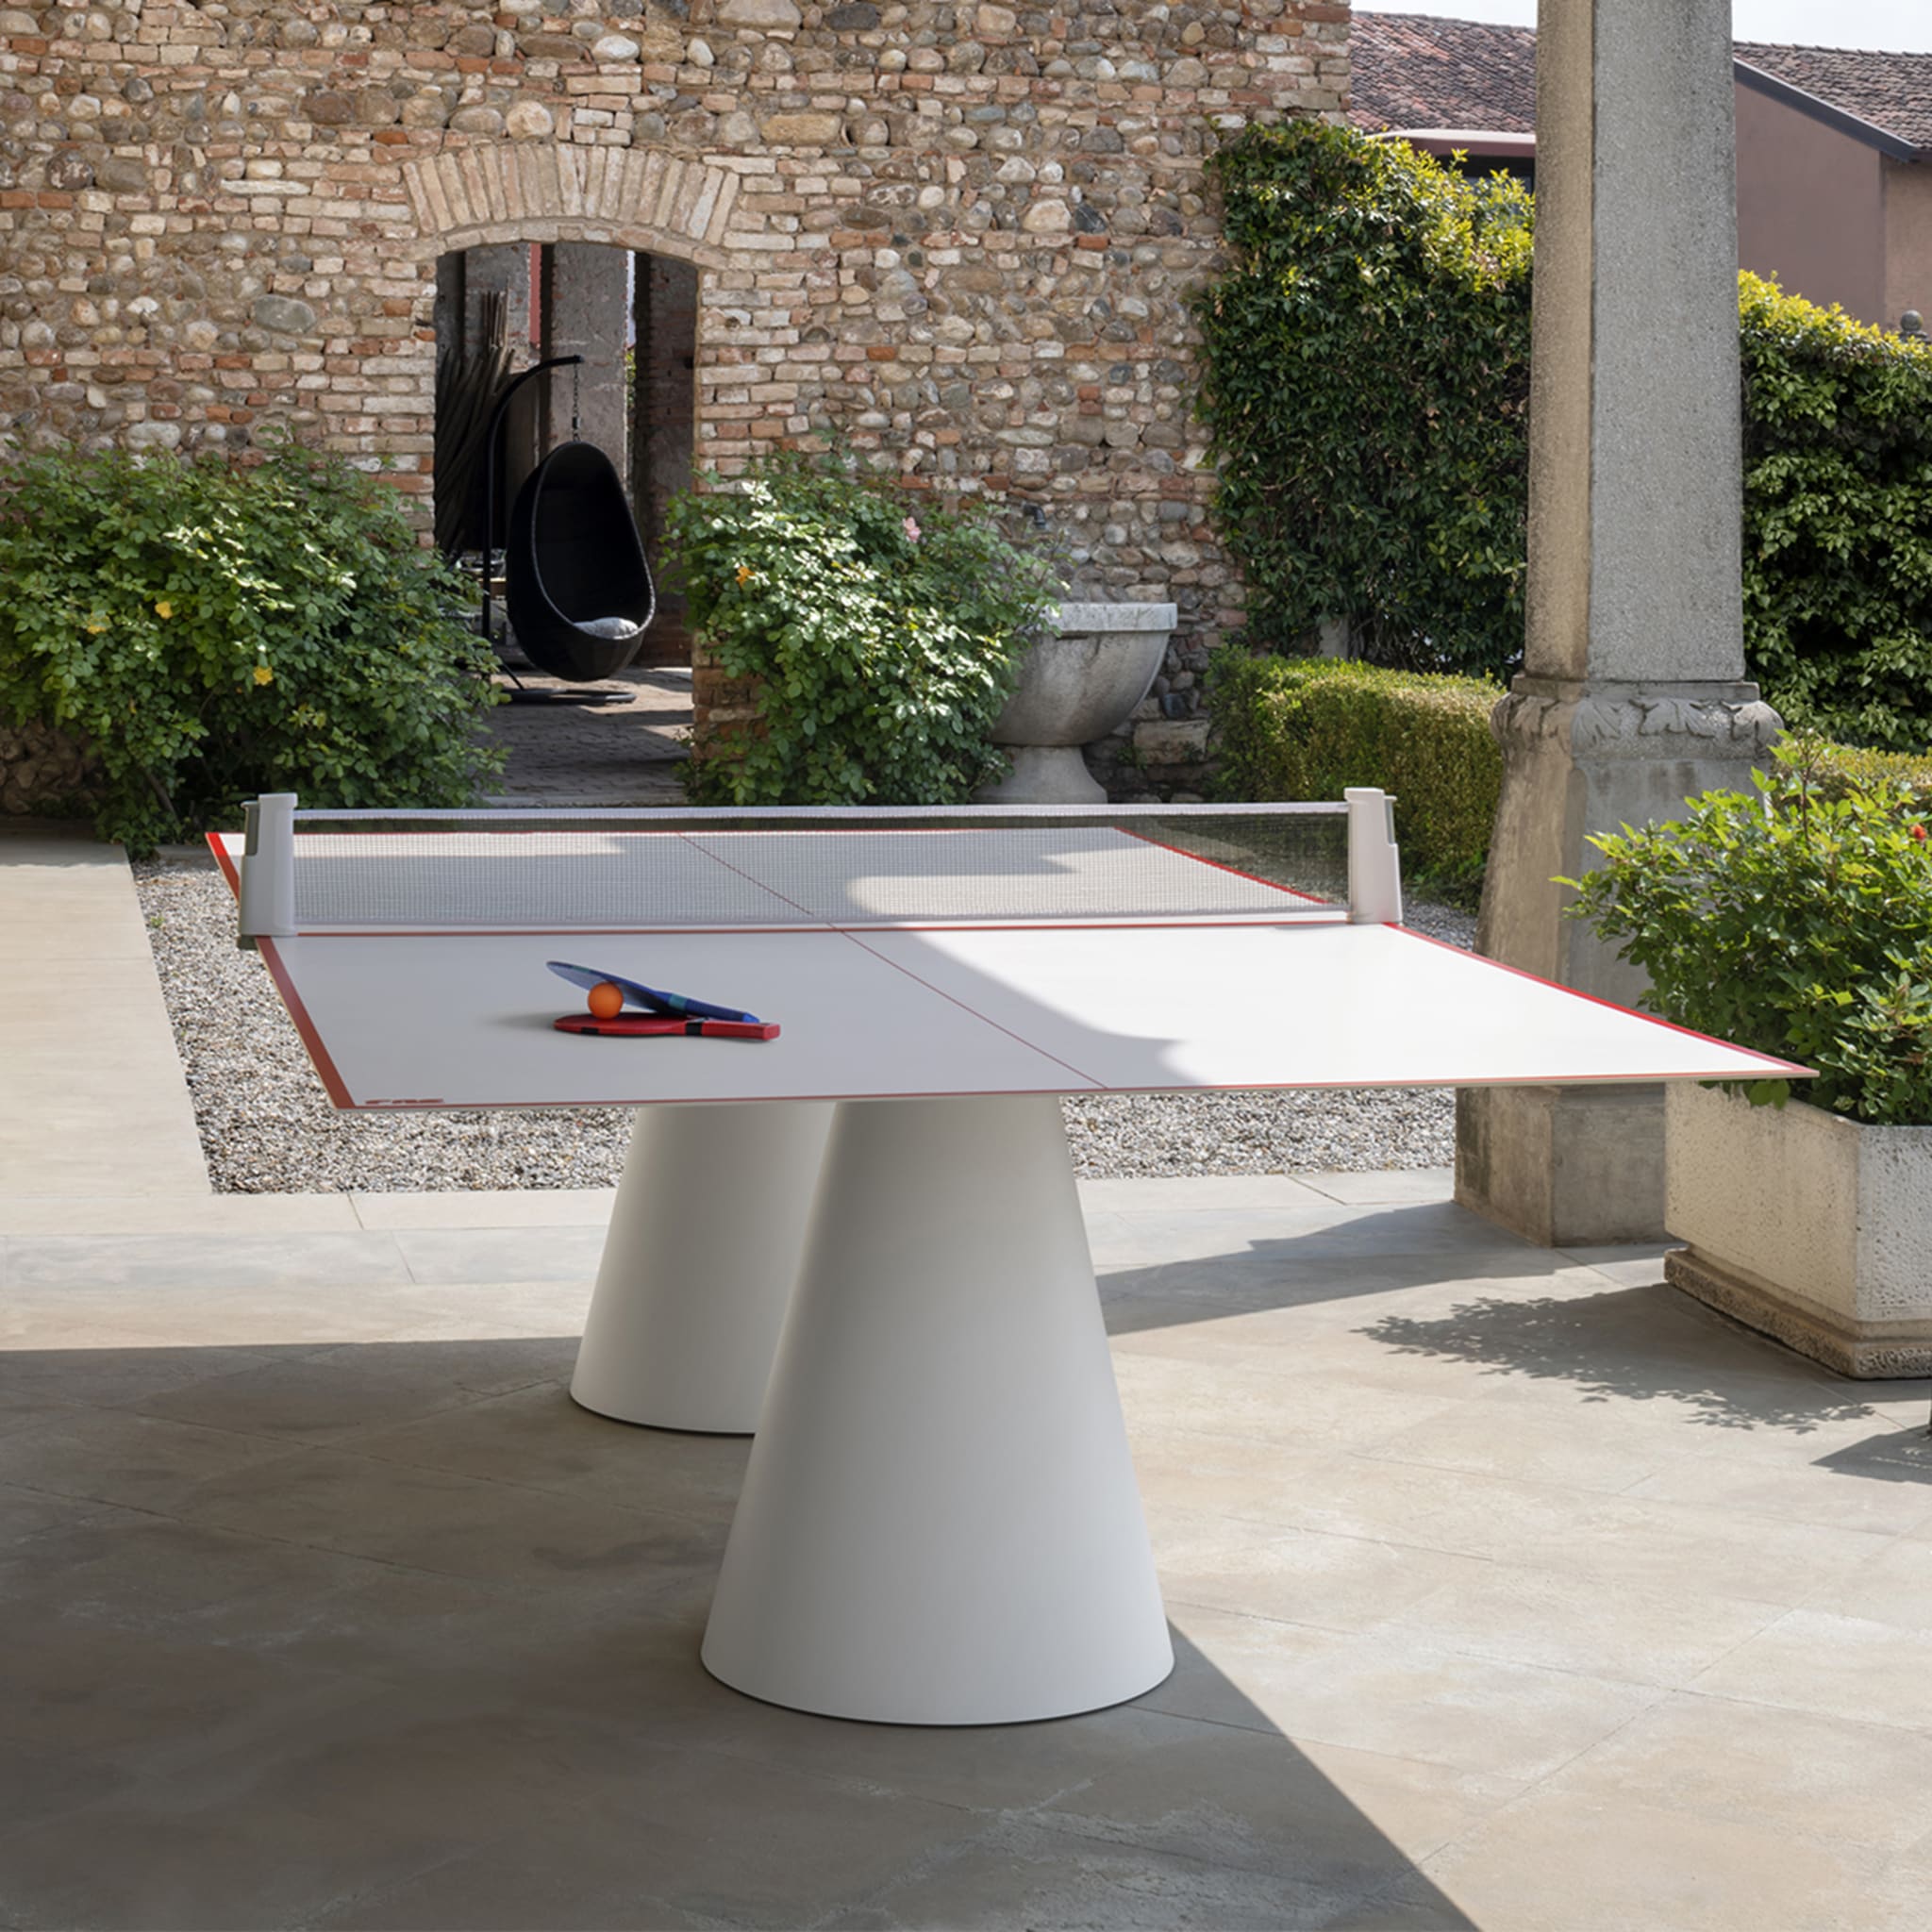 Dada Outdoor White Ping Pong Table by Basaglia + Rota Nodari - Alternative view 5